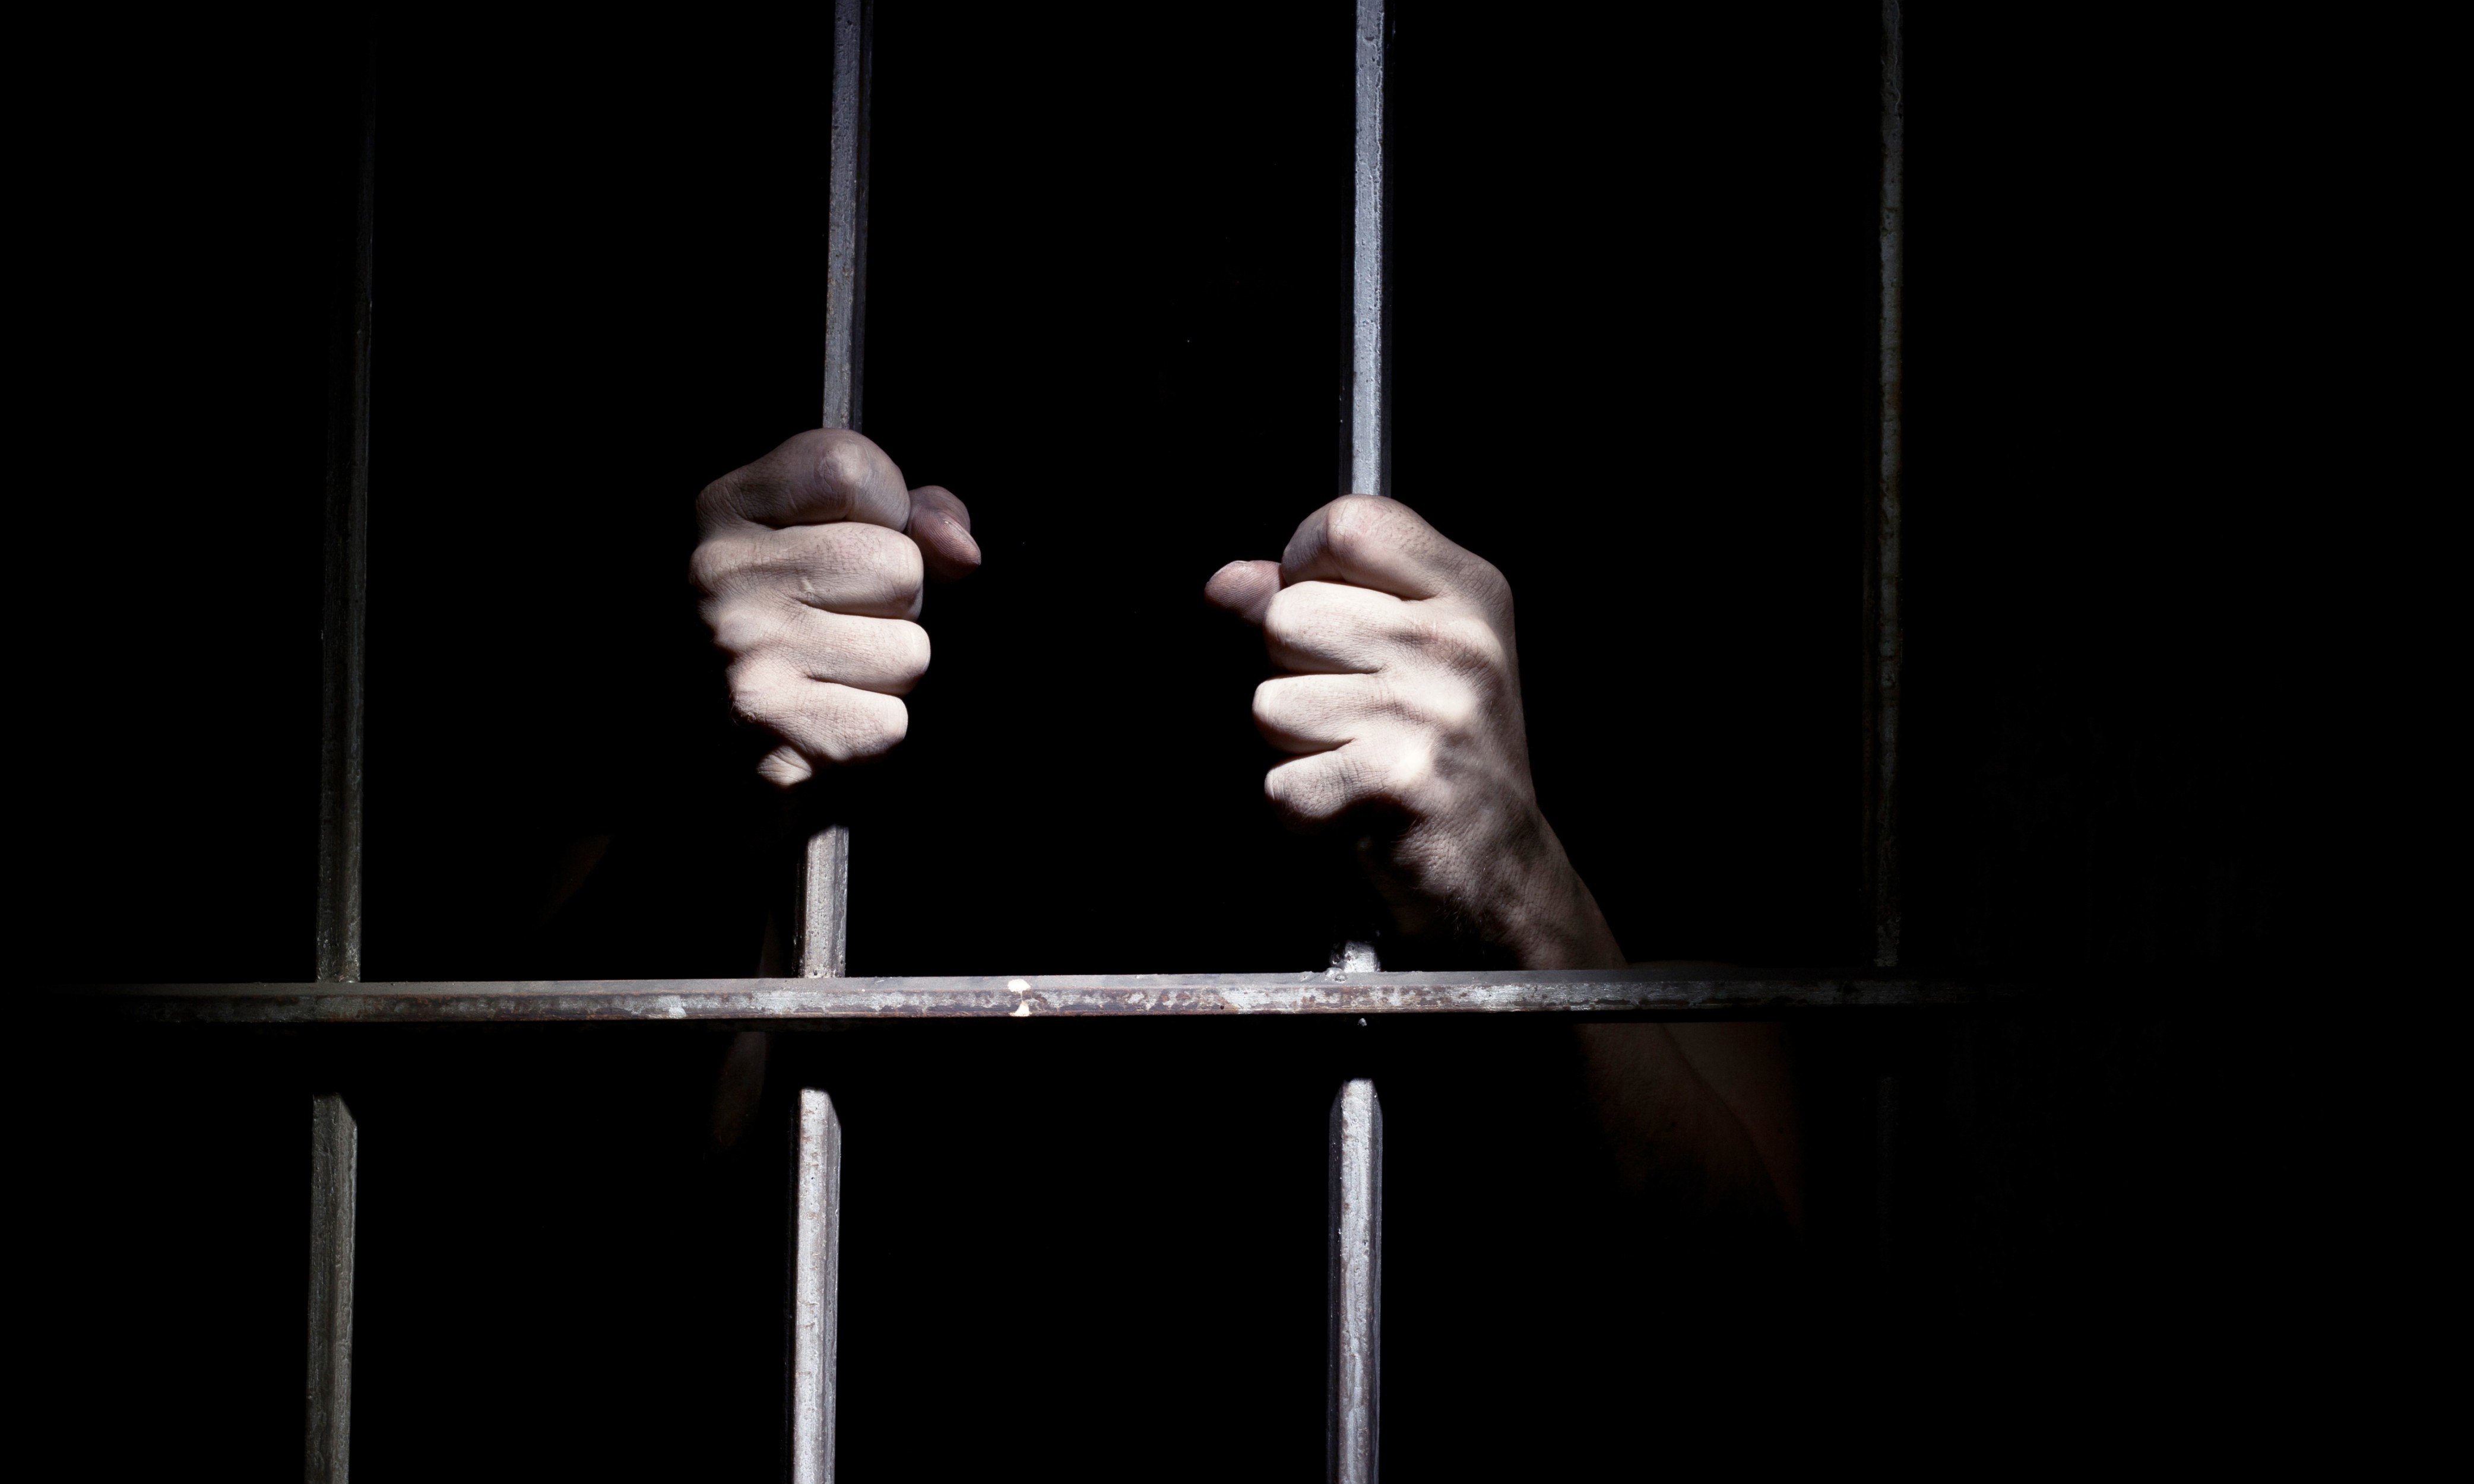 Locked steel prisoner